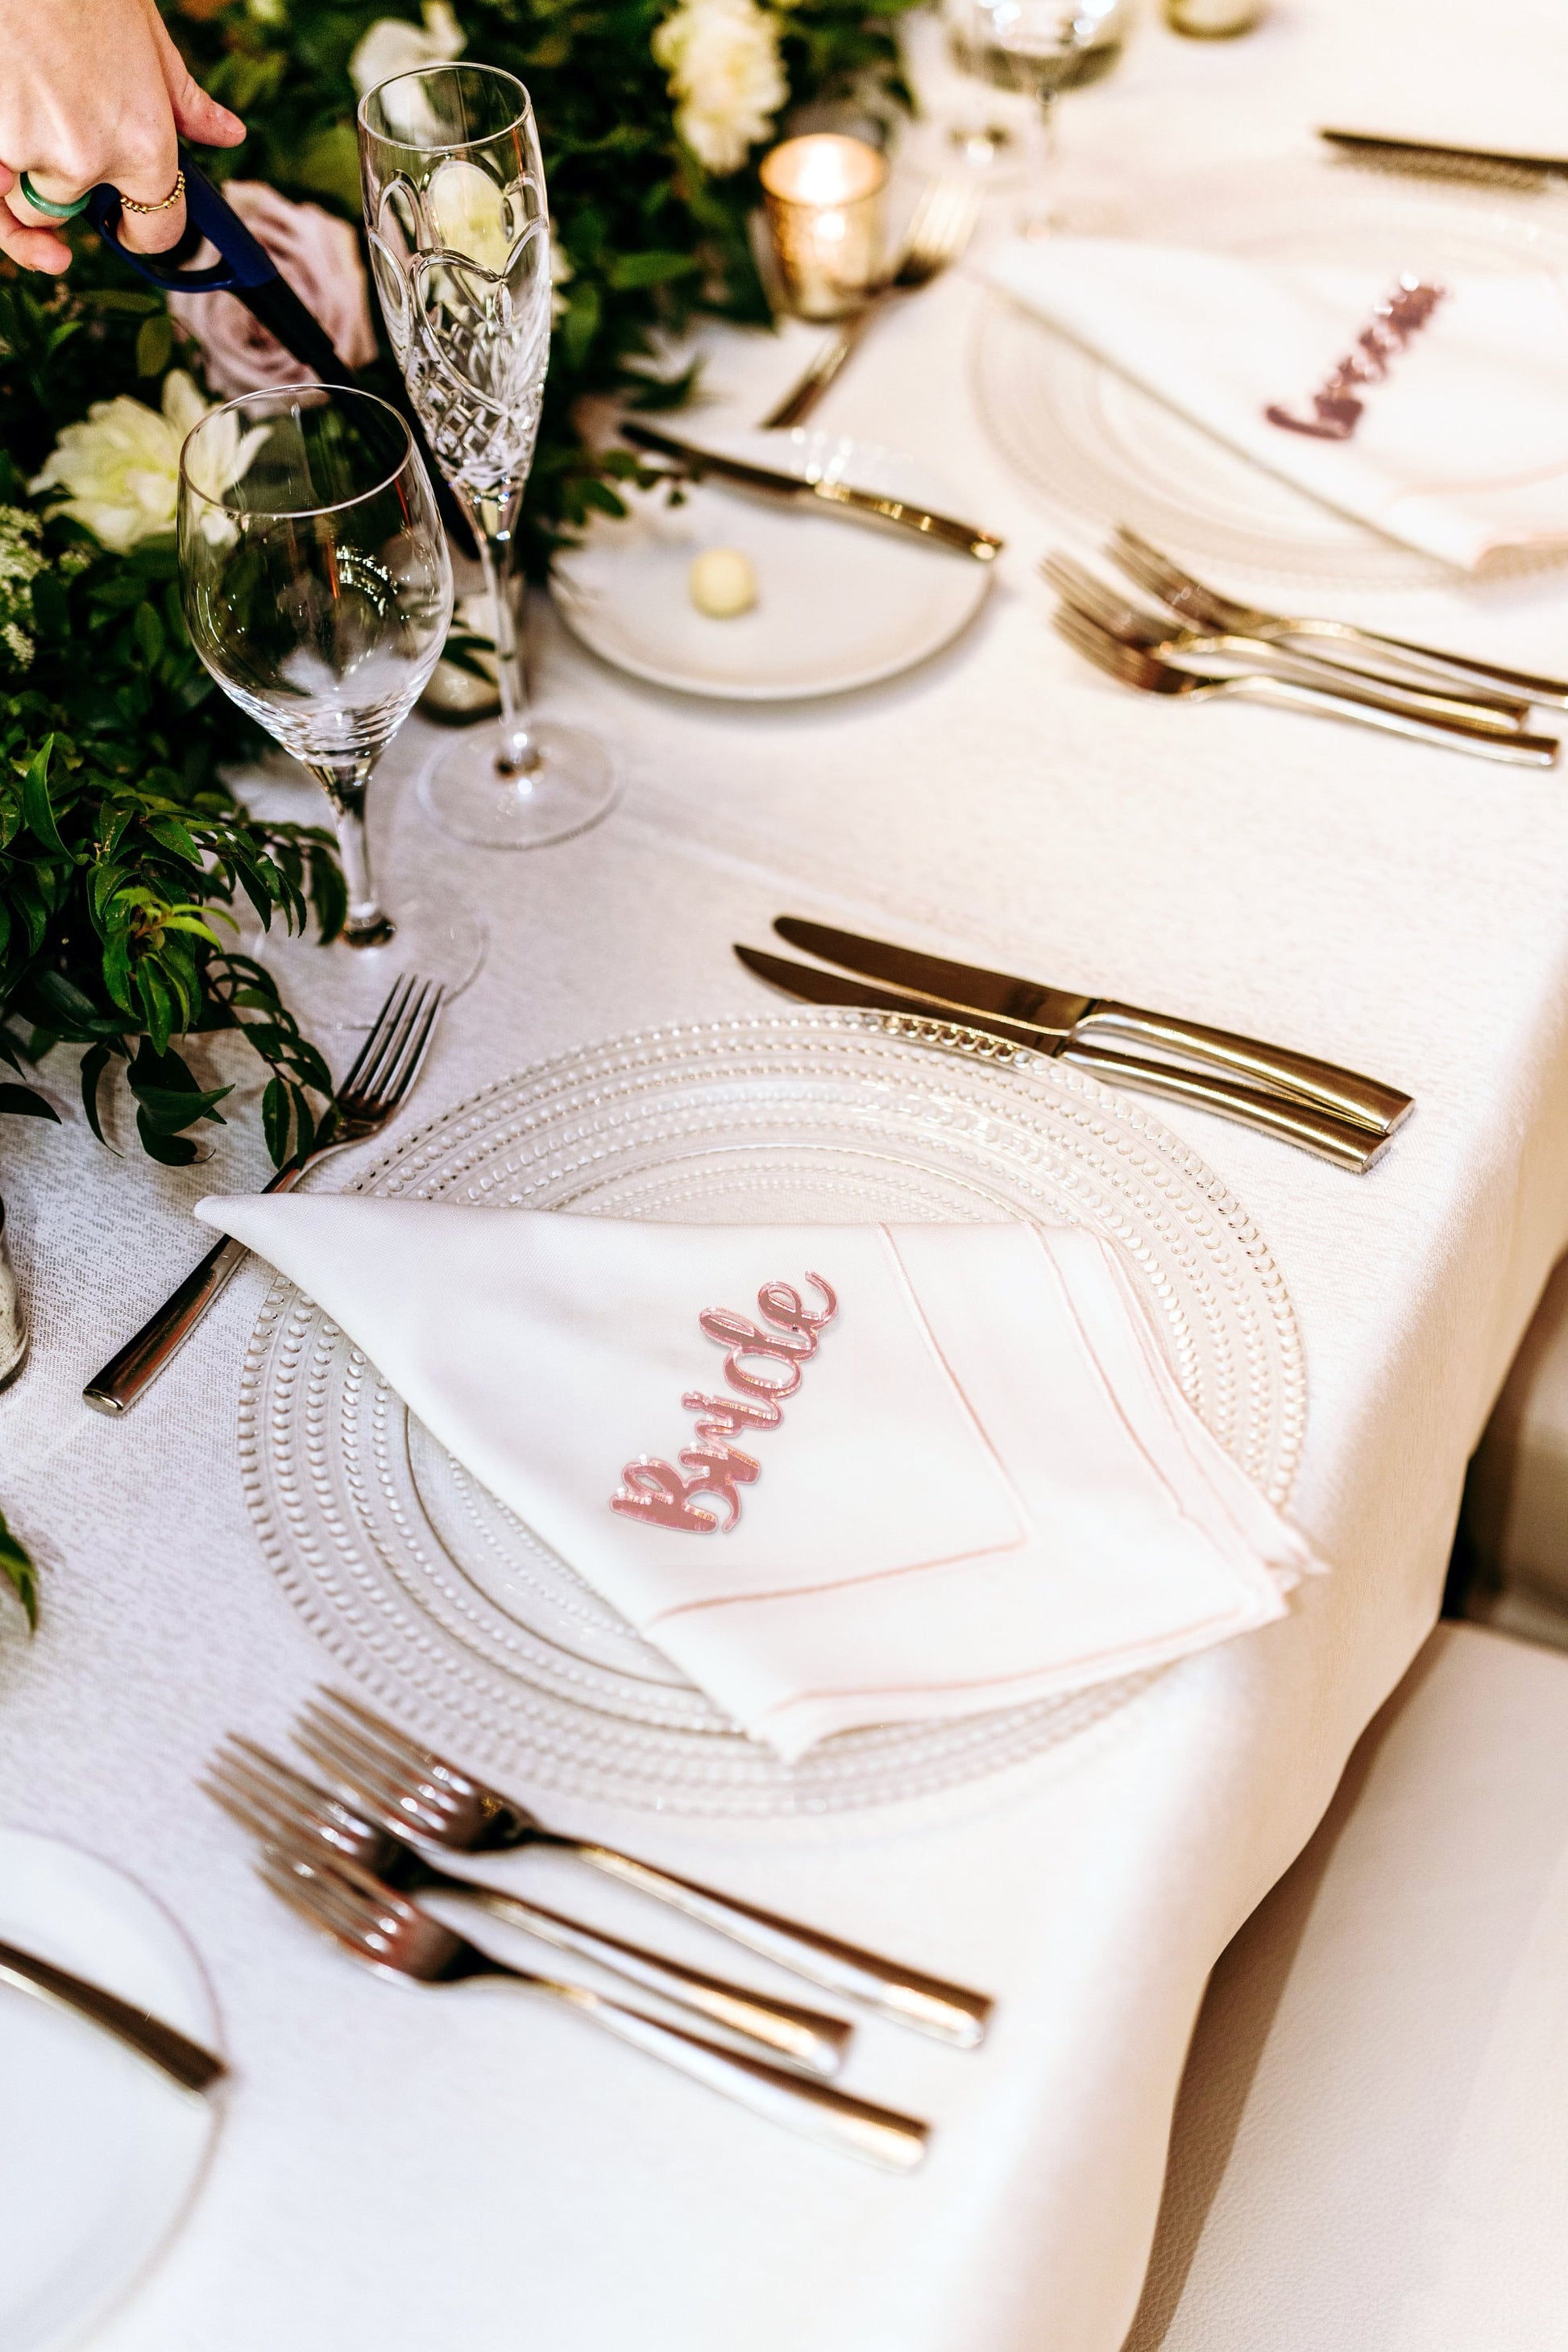 Custom Acrylic Name Sign, Wedding Table Decor, Wedding Table Place Cards, Custom Name in Acrylic, Custom Acrylic Name Tags